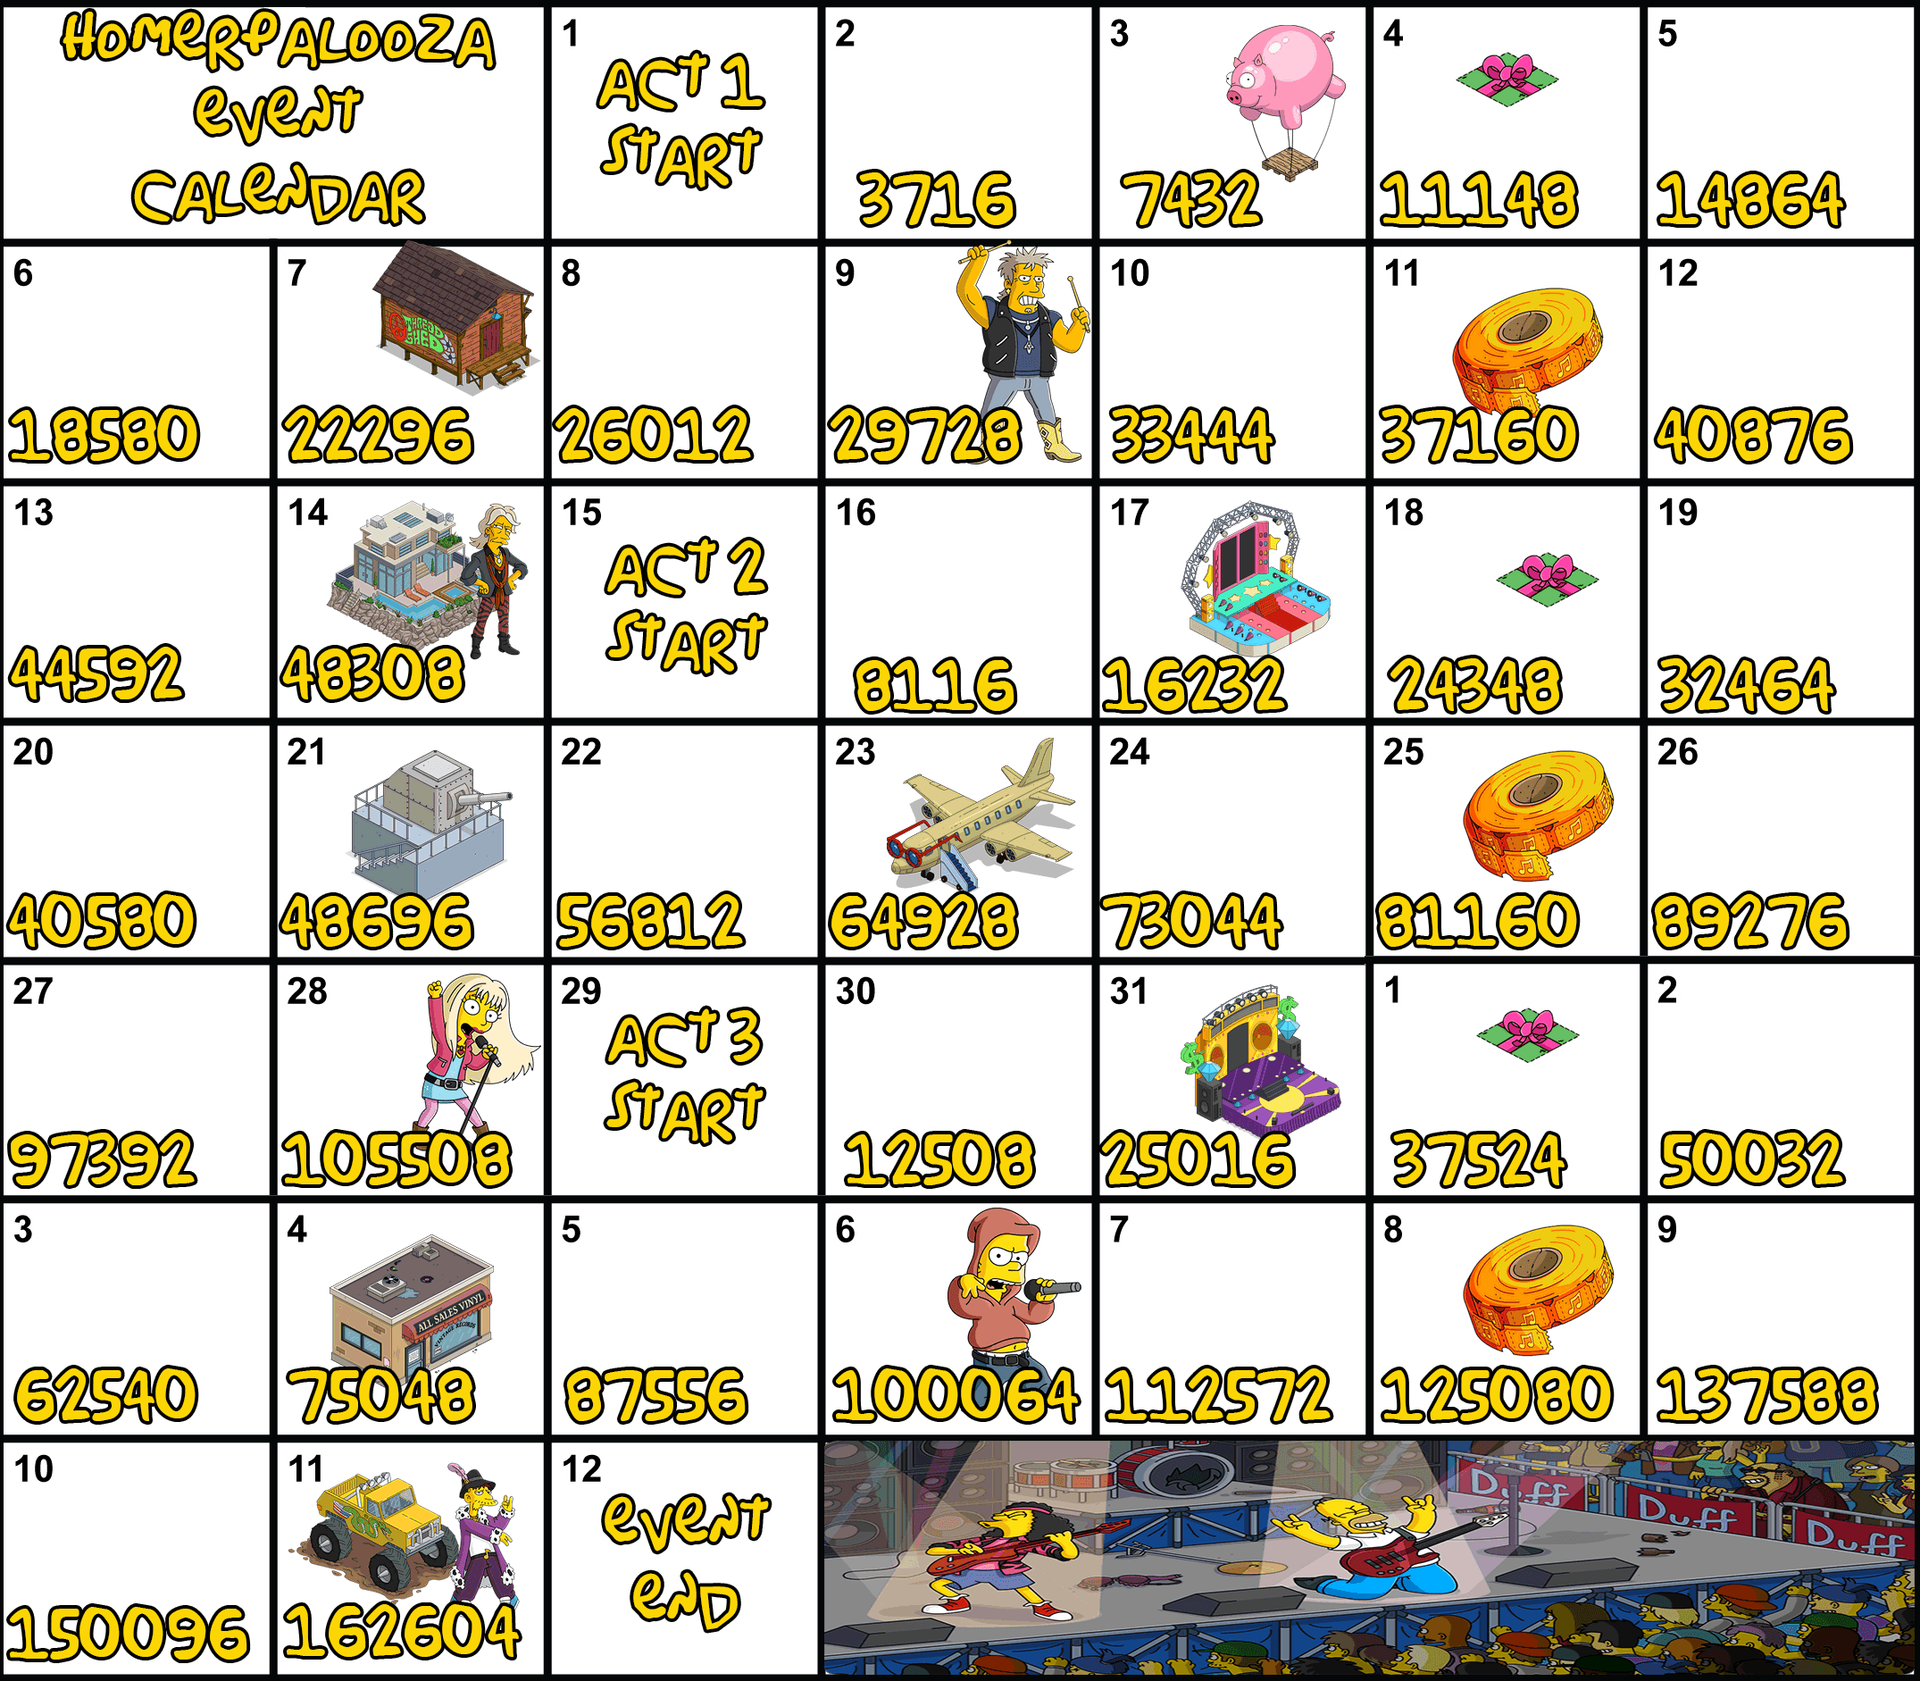 Homerpalooza_Event_Calendar.png